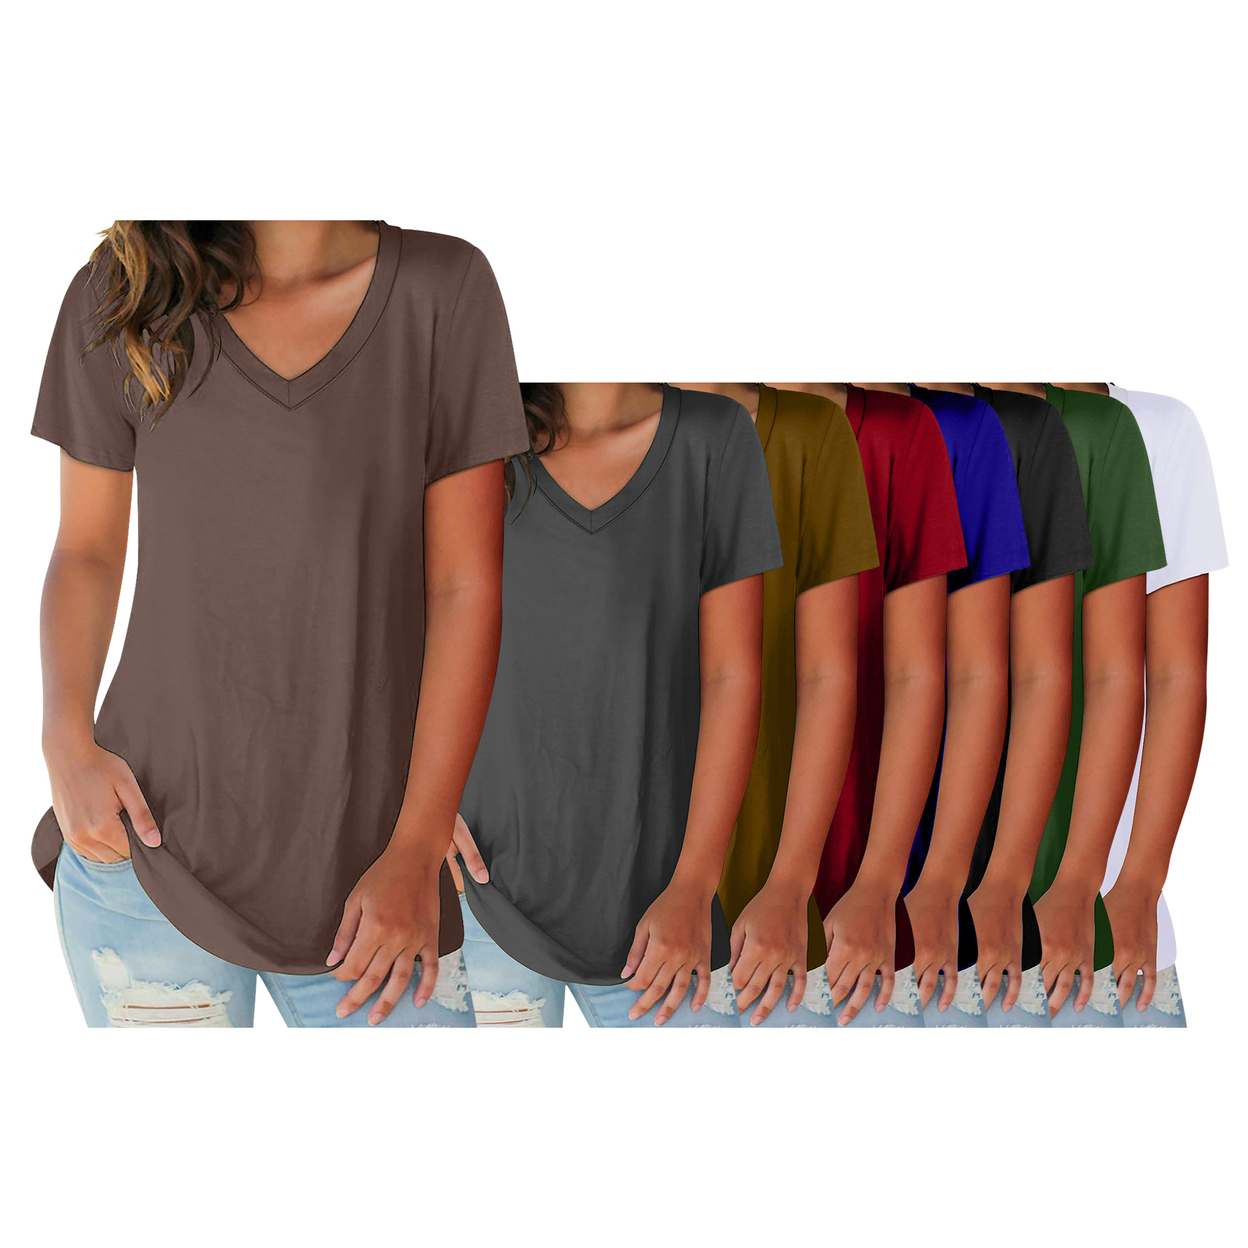 Women's Ultra-Soft Smooth Cotton Blend Basic V-Neck Short Sleeve Shirts - Green, Medium